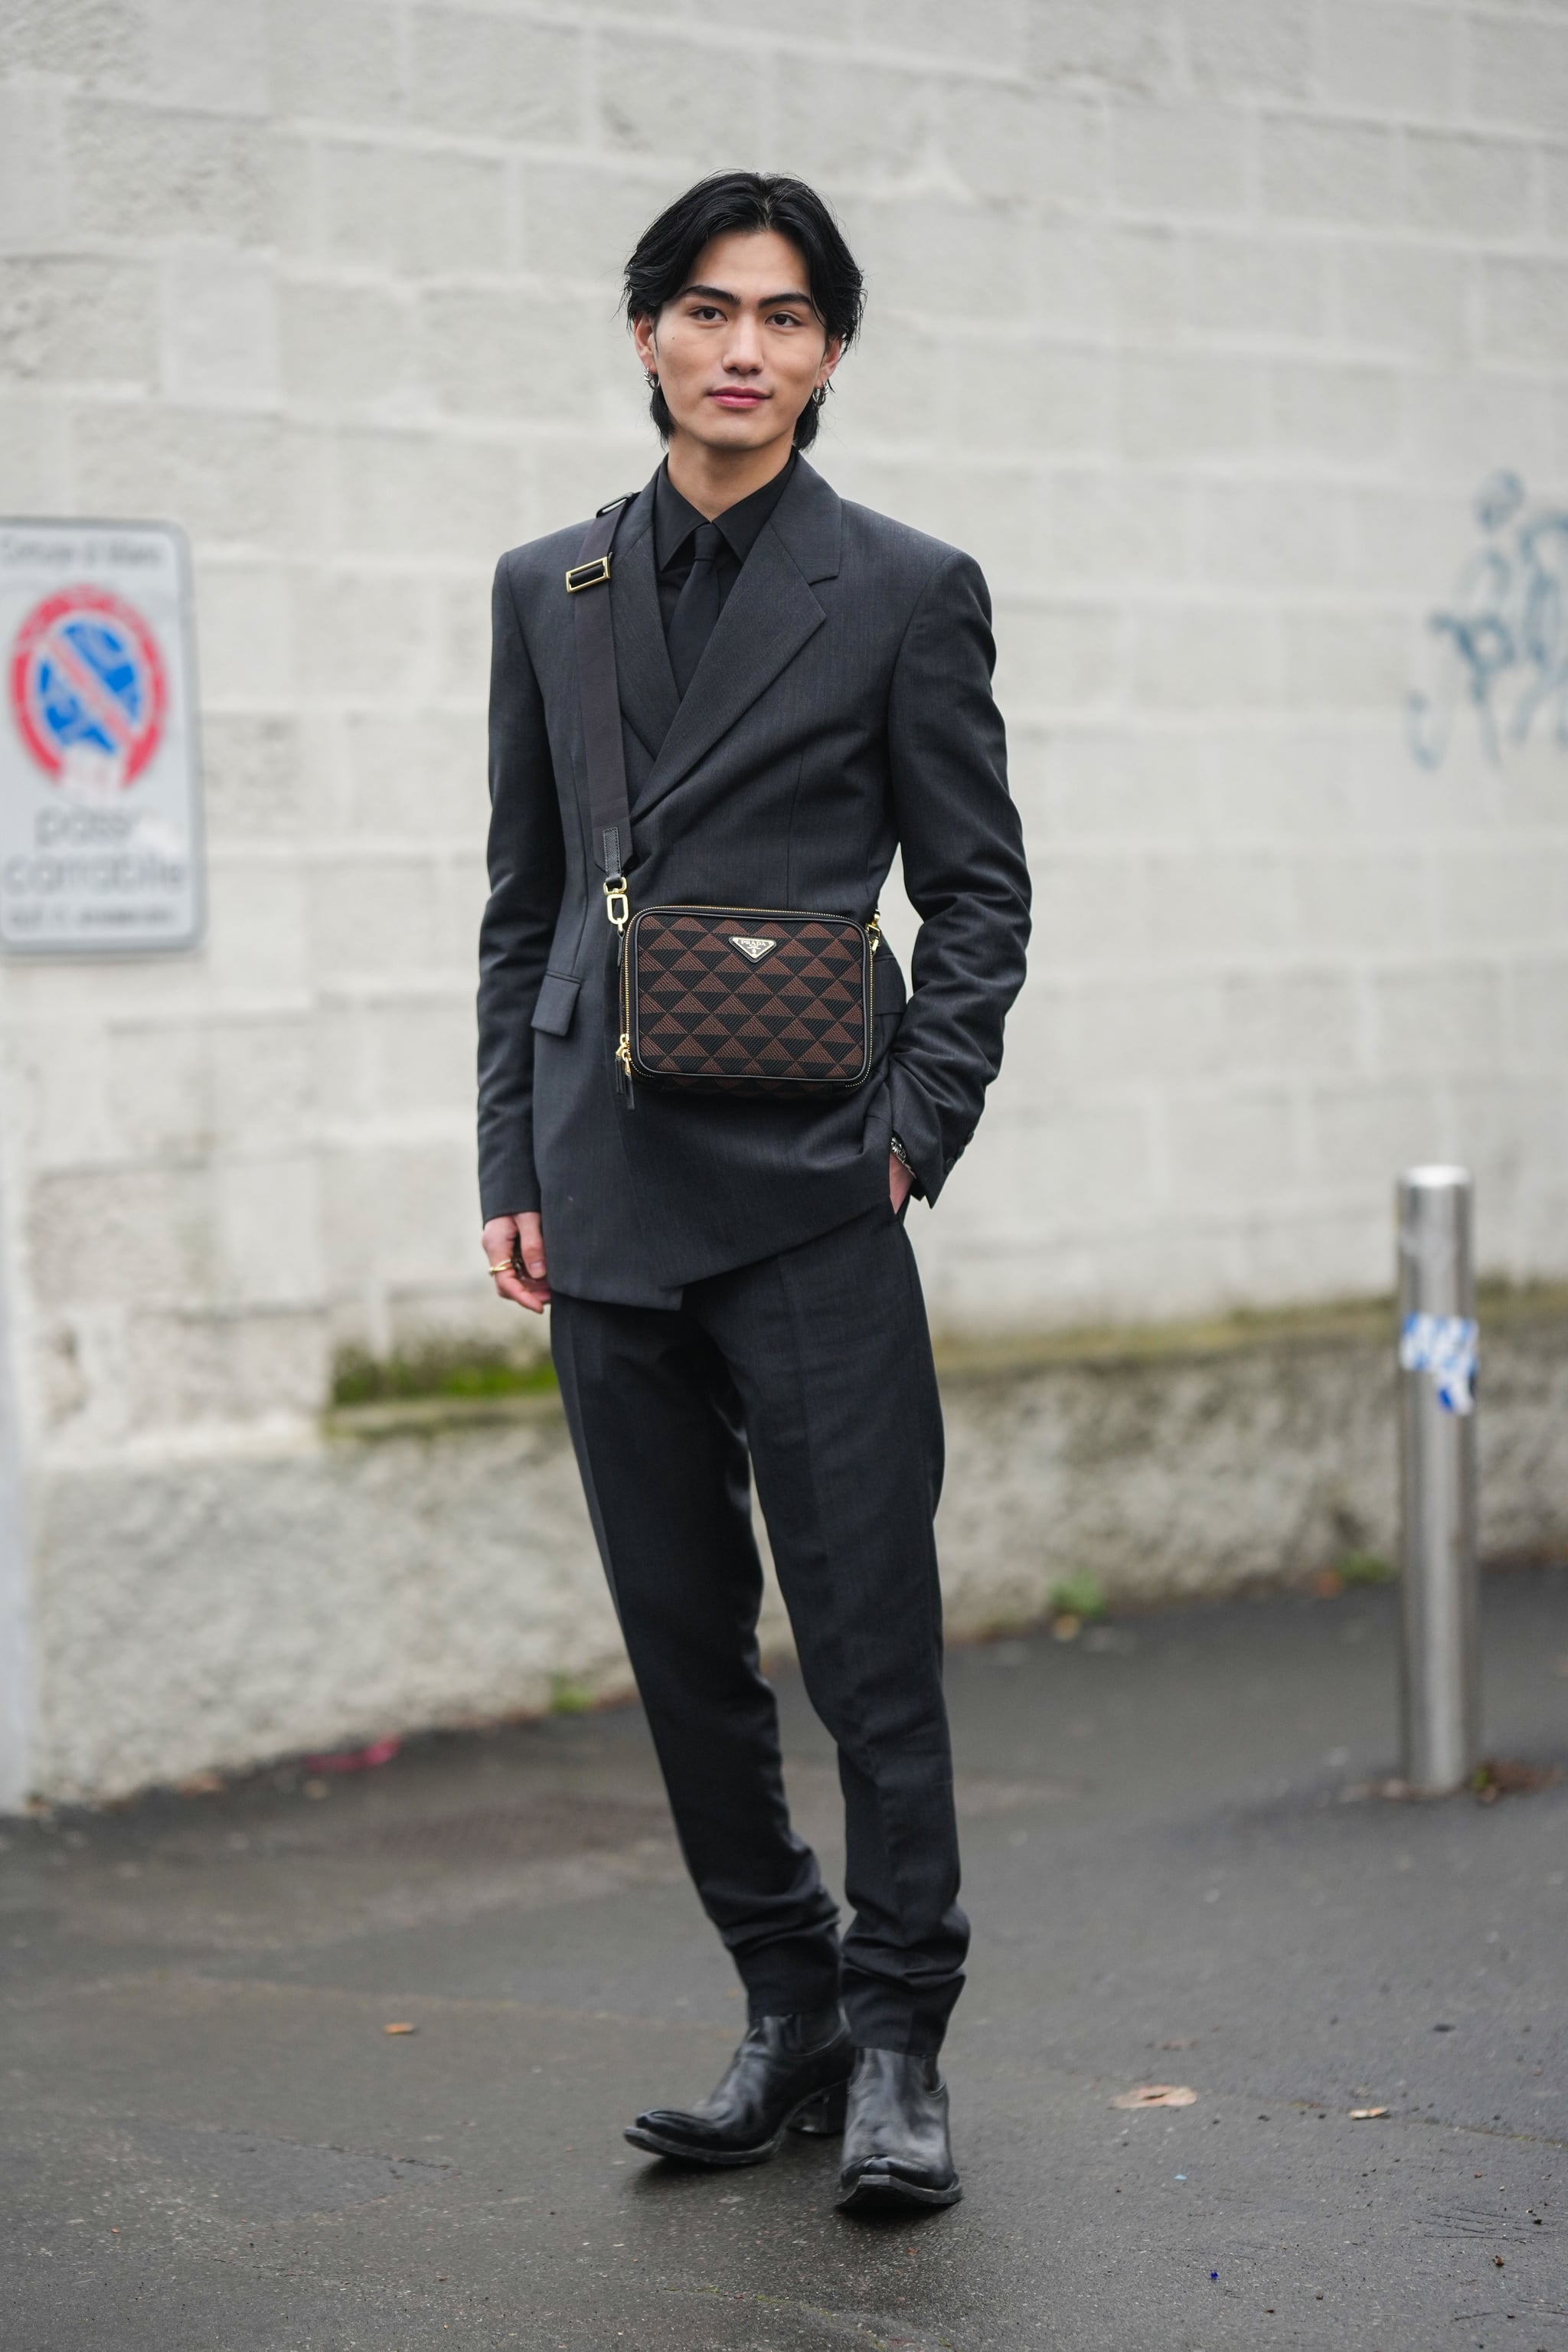 Work Bags For Men: Messenger Bag | 11 Practical and Stylish Men's Work Bags  | POPSUGAR Fashion Photo 14